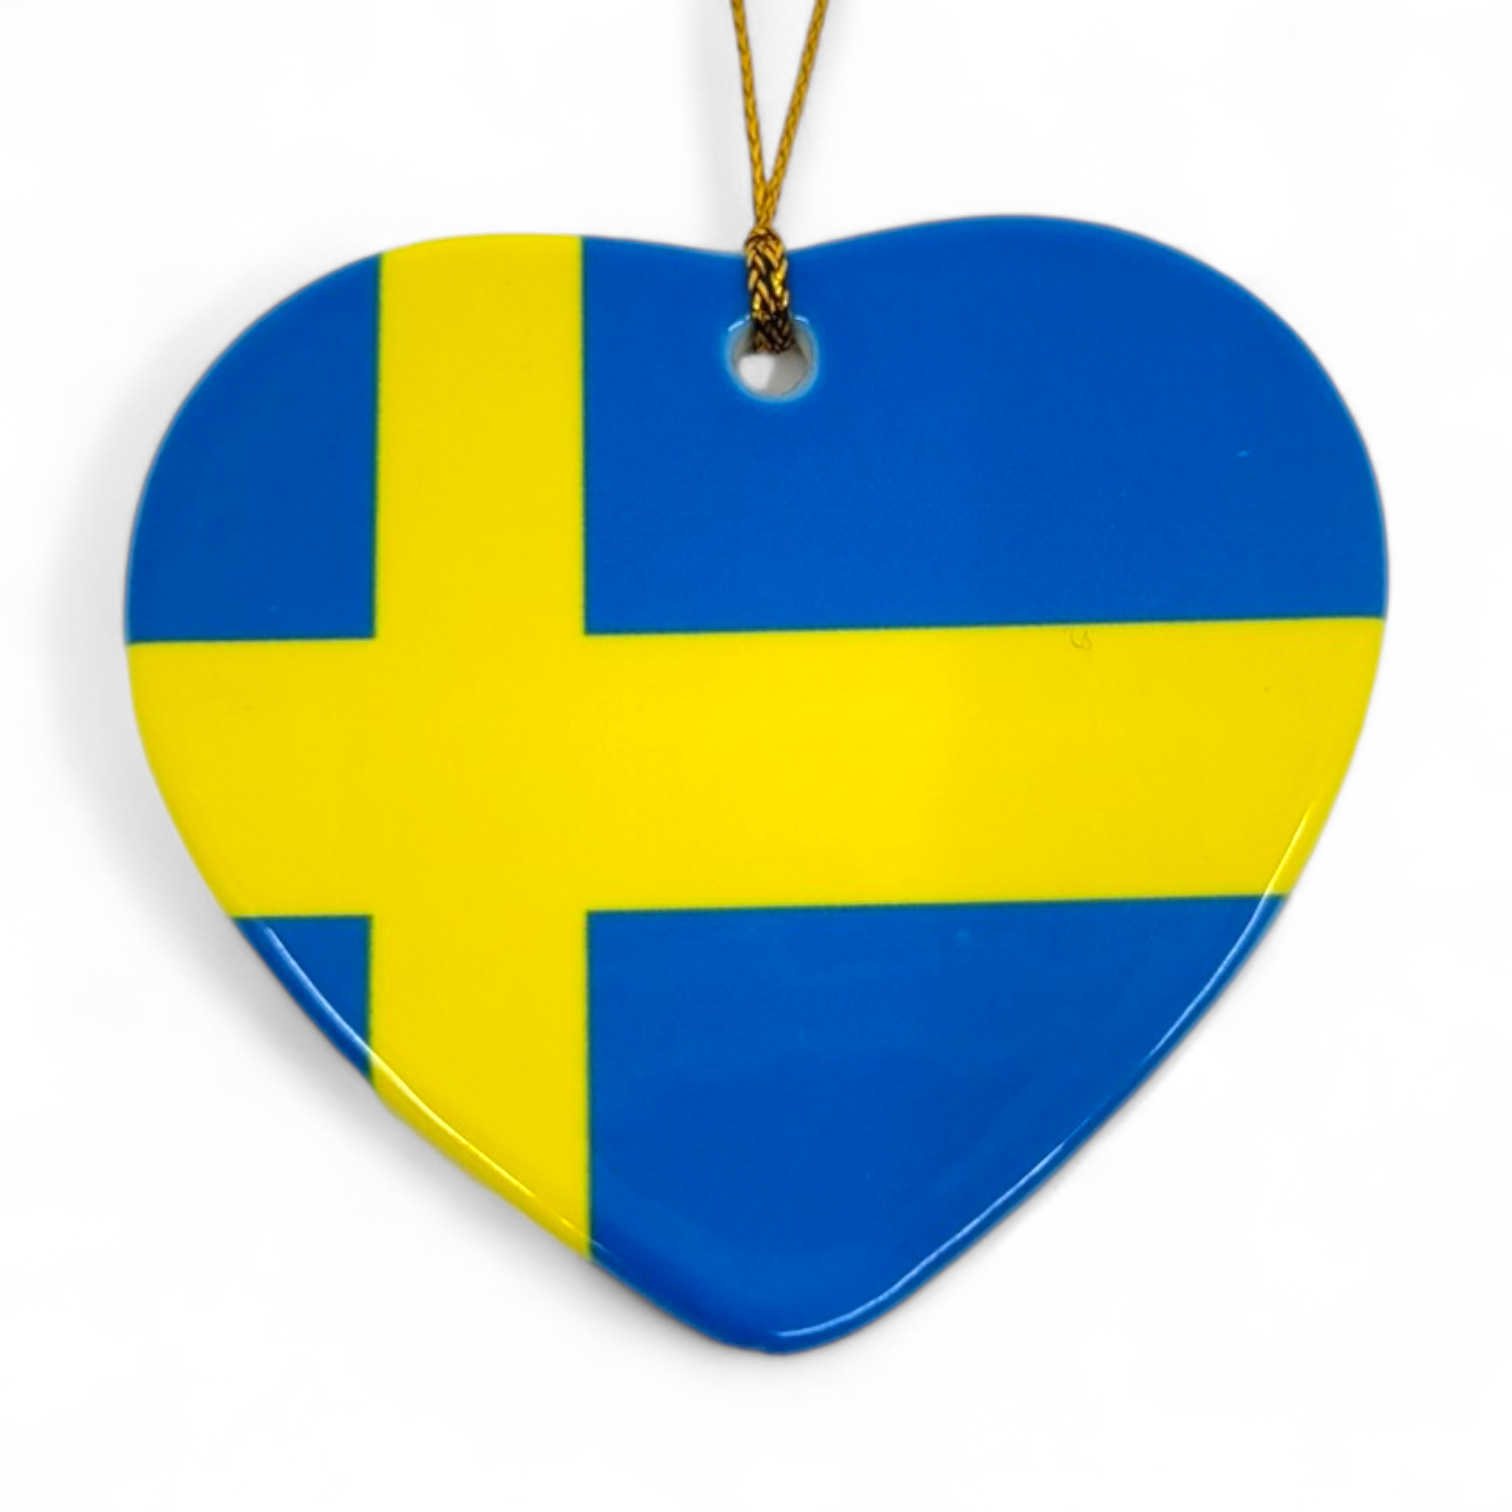 Ornament: 3" Heart Shaped Sweden Flag